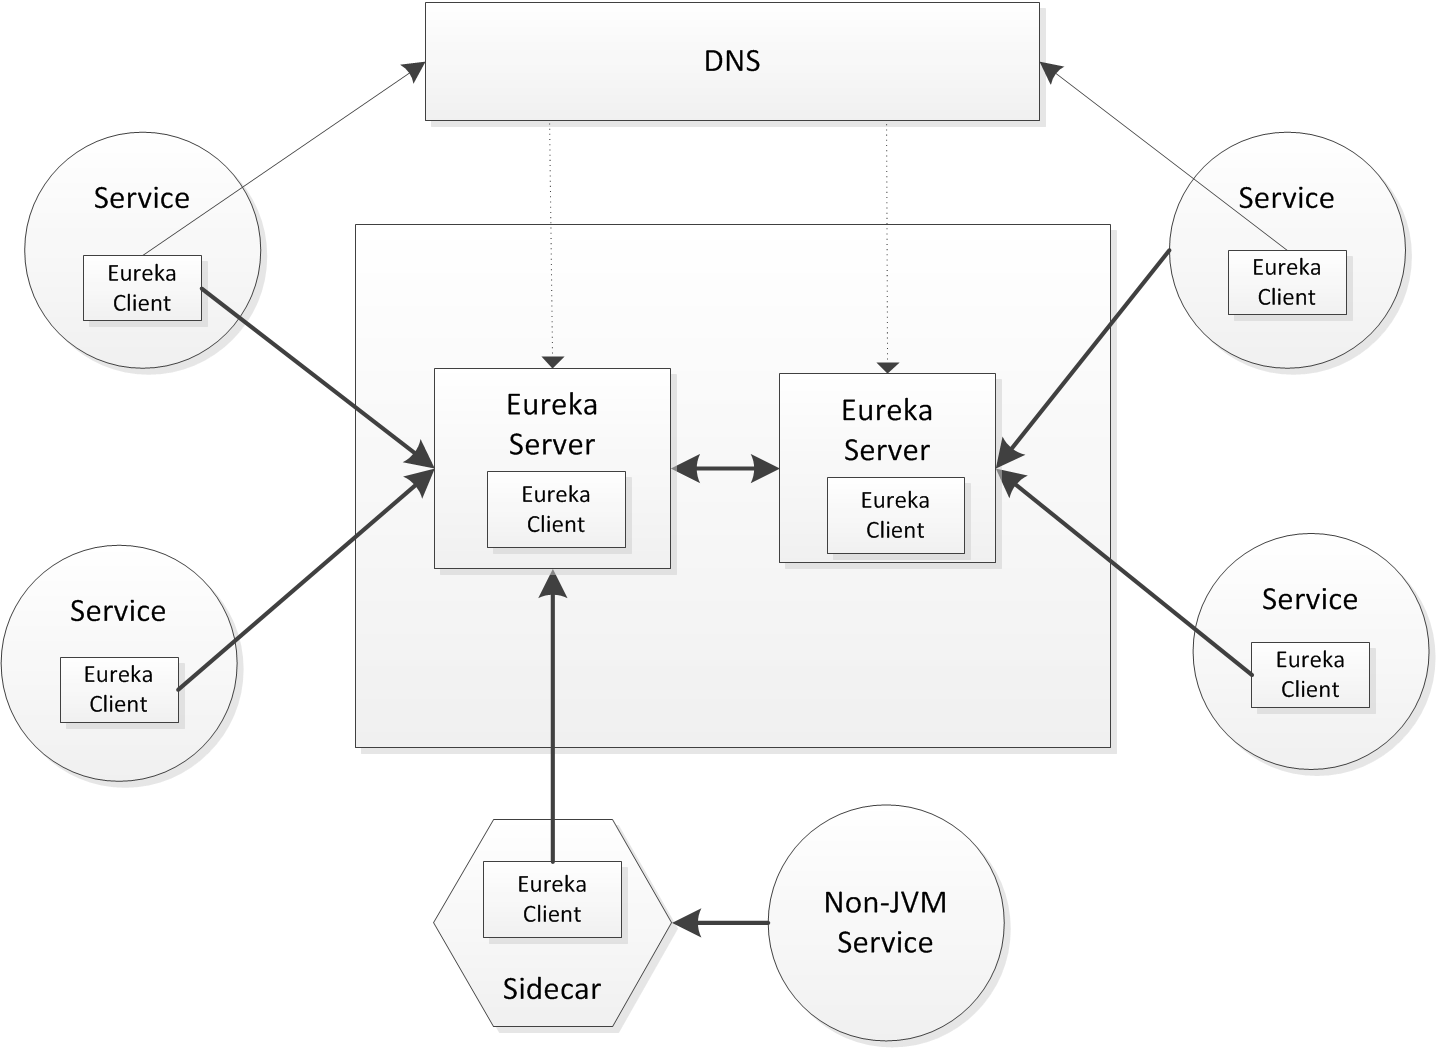 eureka-dns-cluster-architecture-diagram